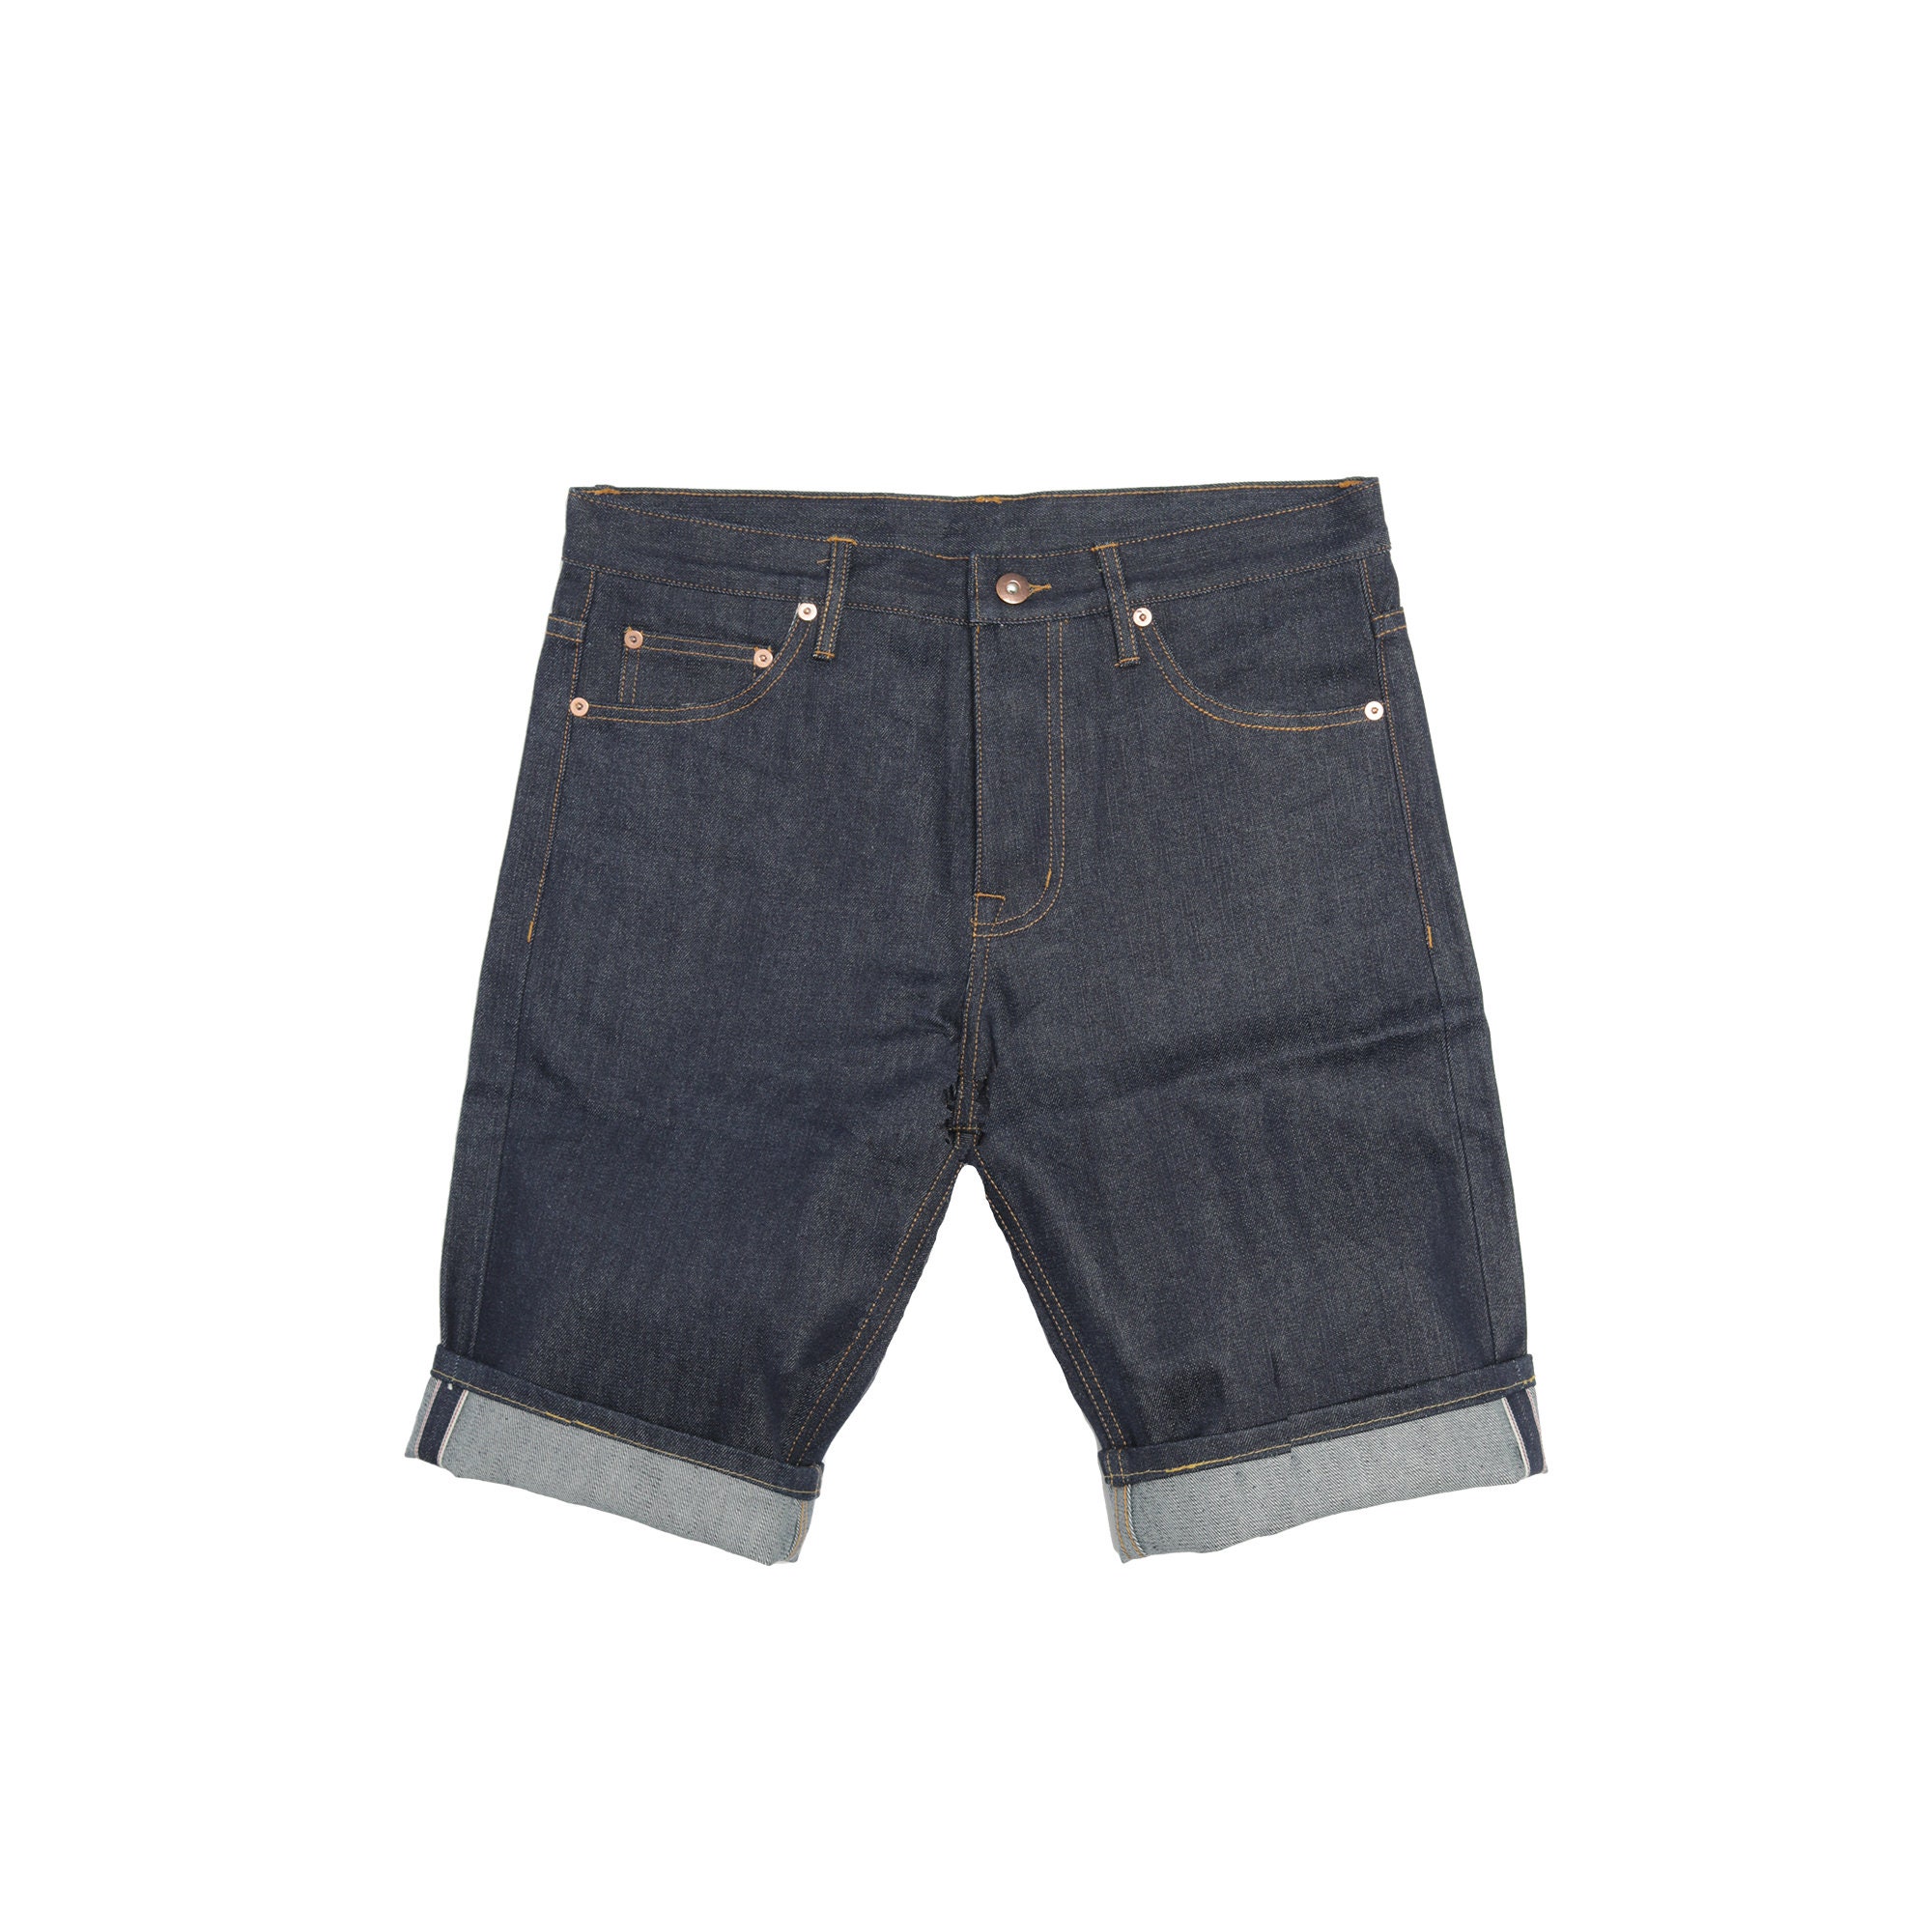 Japanese Selvedge Dry Denim Shorts Mid Rise Short Pants Jeans 